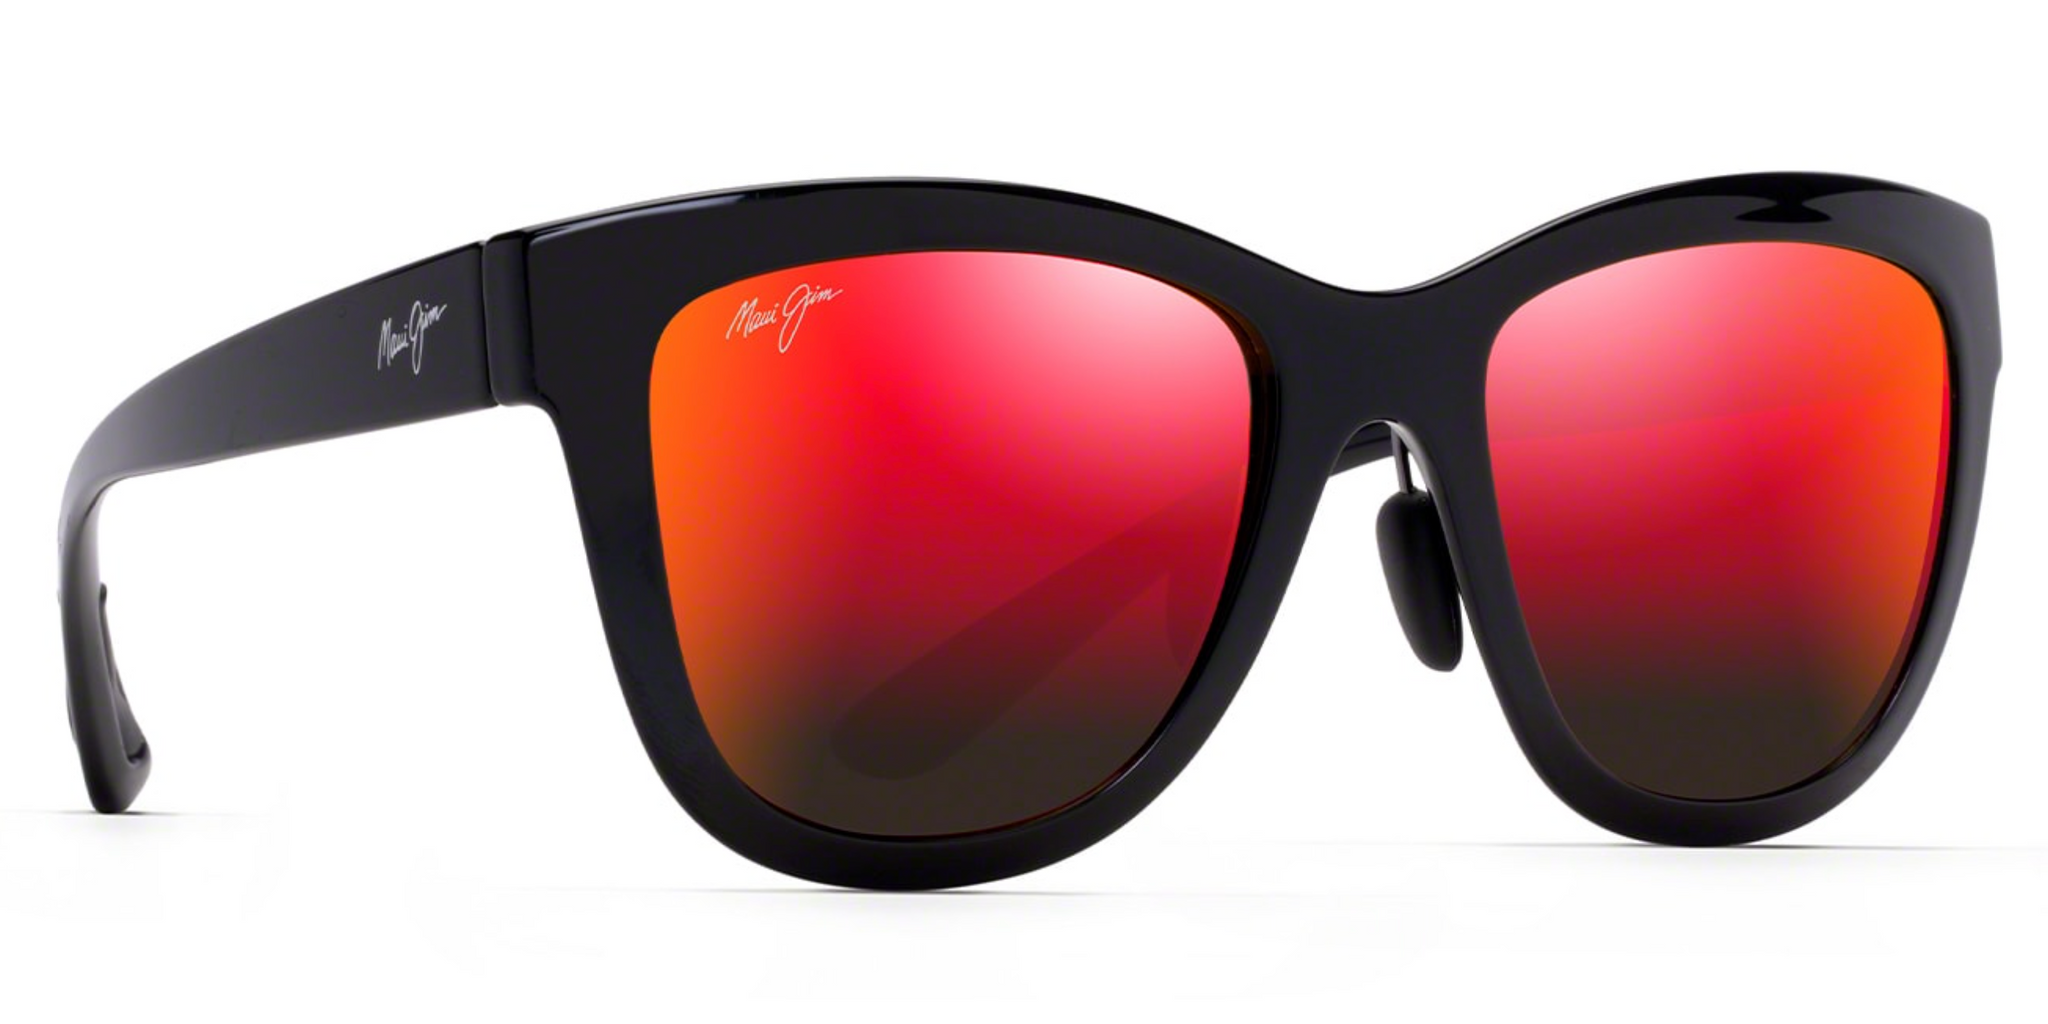 MAUI JIM KEOKEA 447 Sunglasses: 447-02, B447-03M, H447-10,RM447-04T,  GM447-11 - Flight Sunglasses